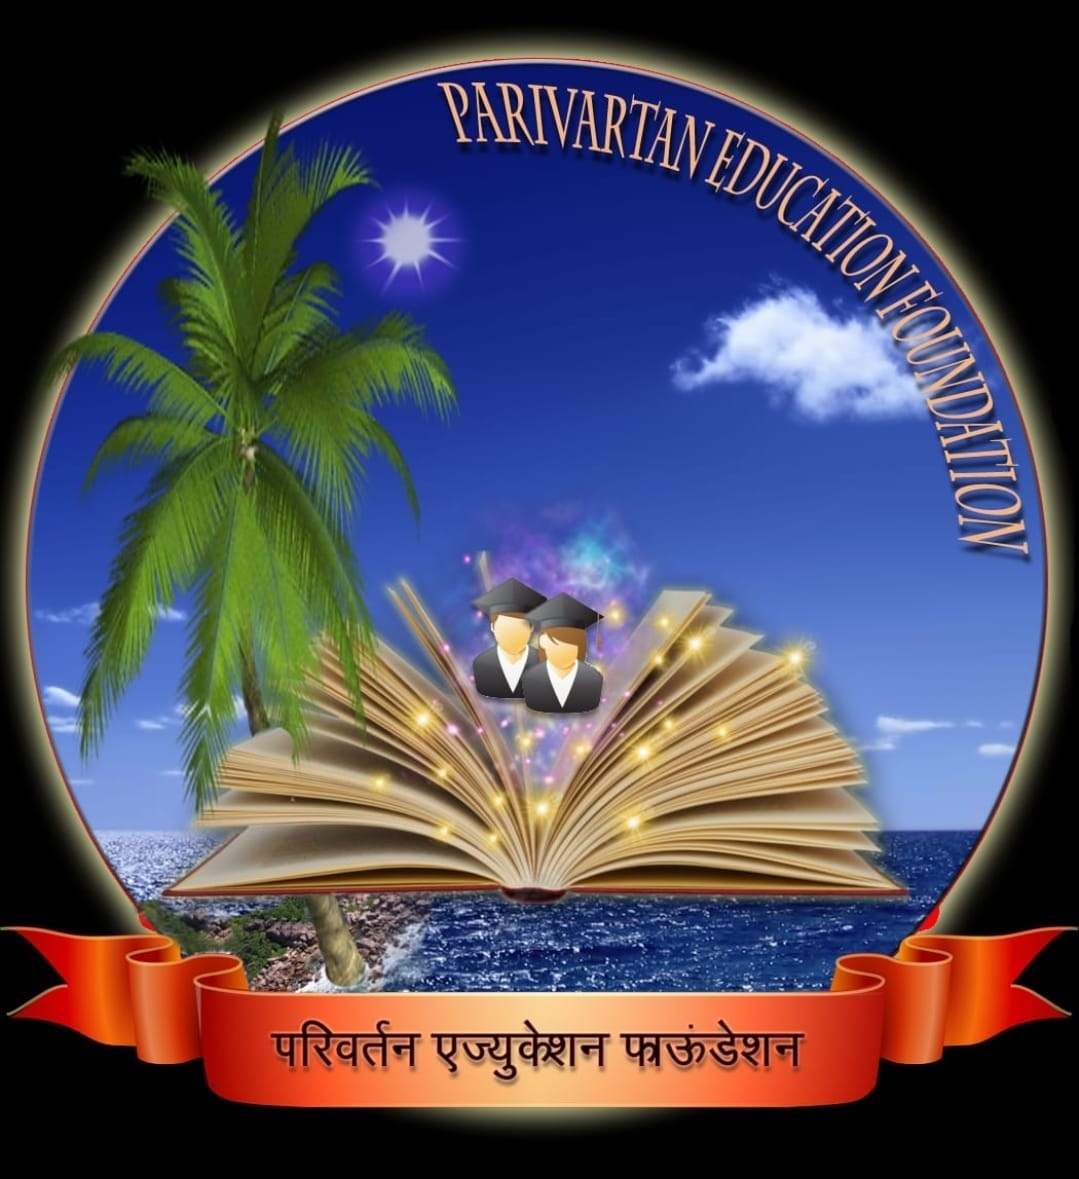 The Parivartan Education Foundation